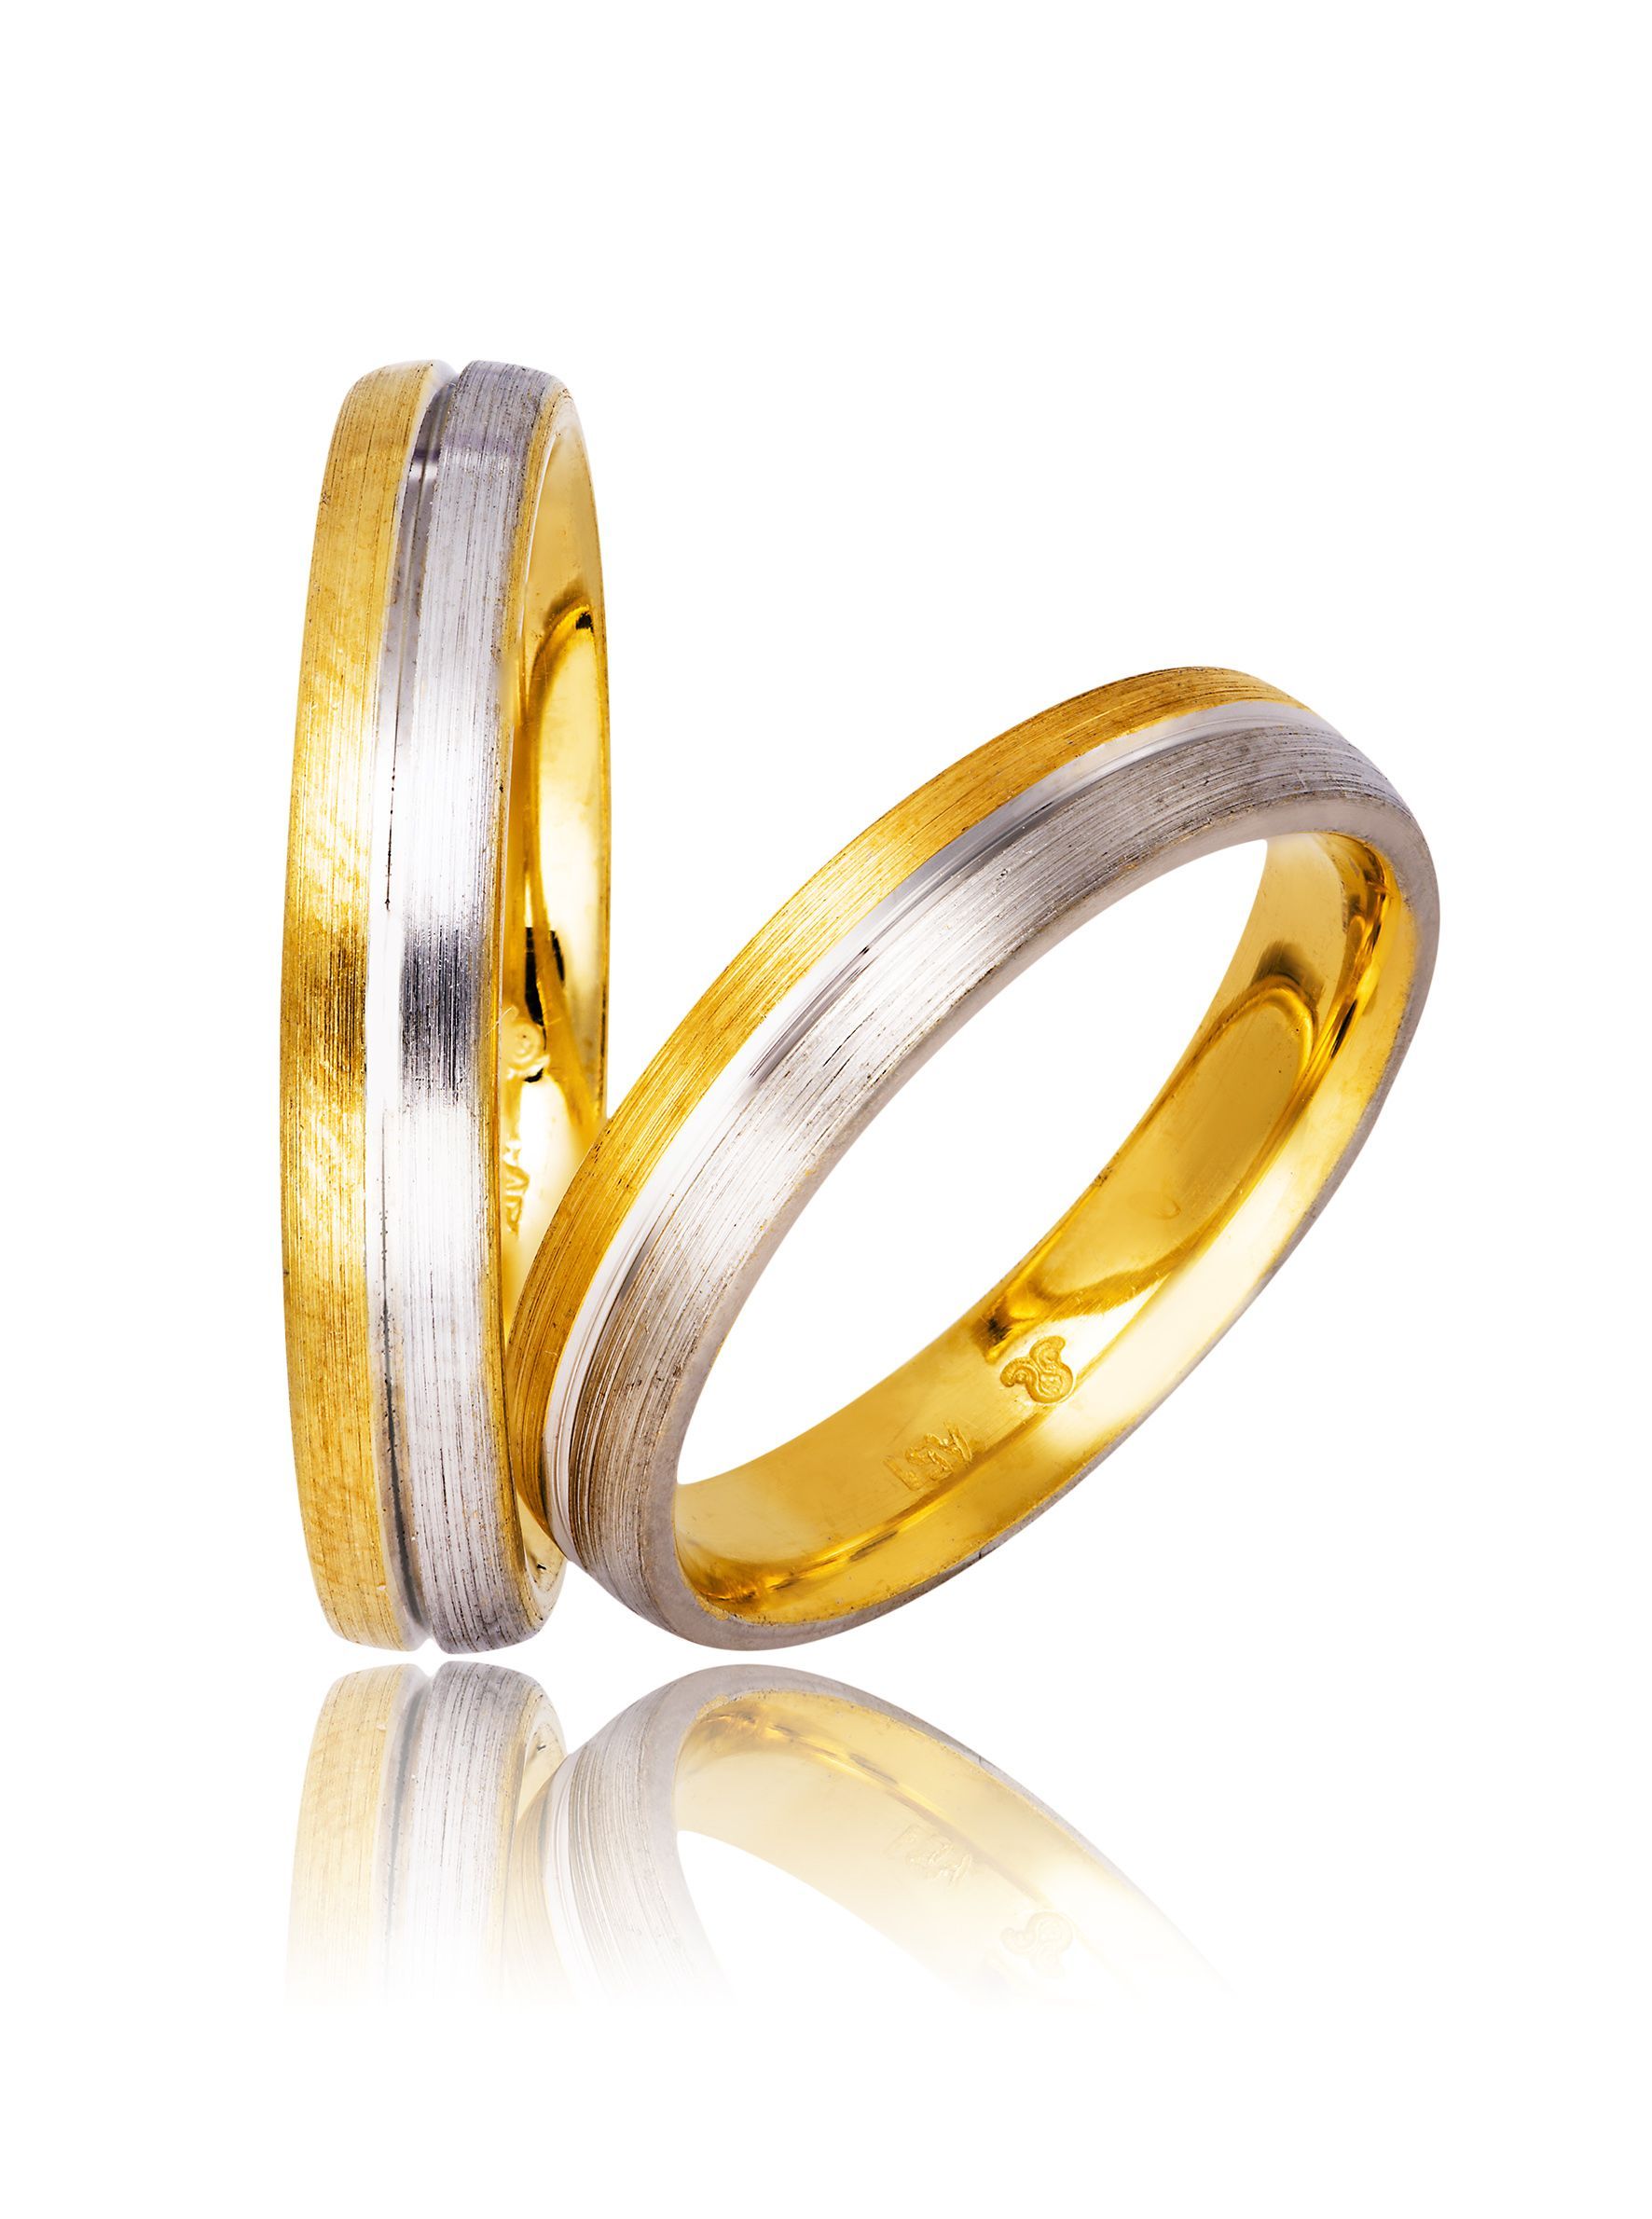 White gold & gold wedding rings 4mm (code 730)